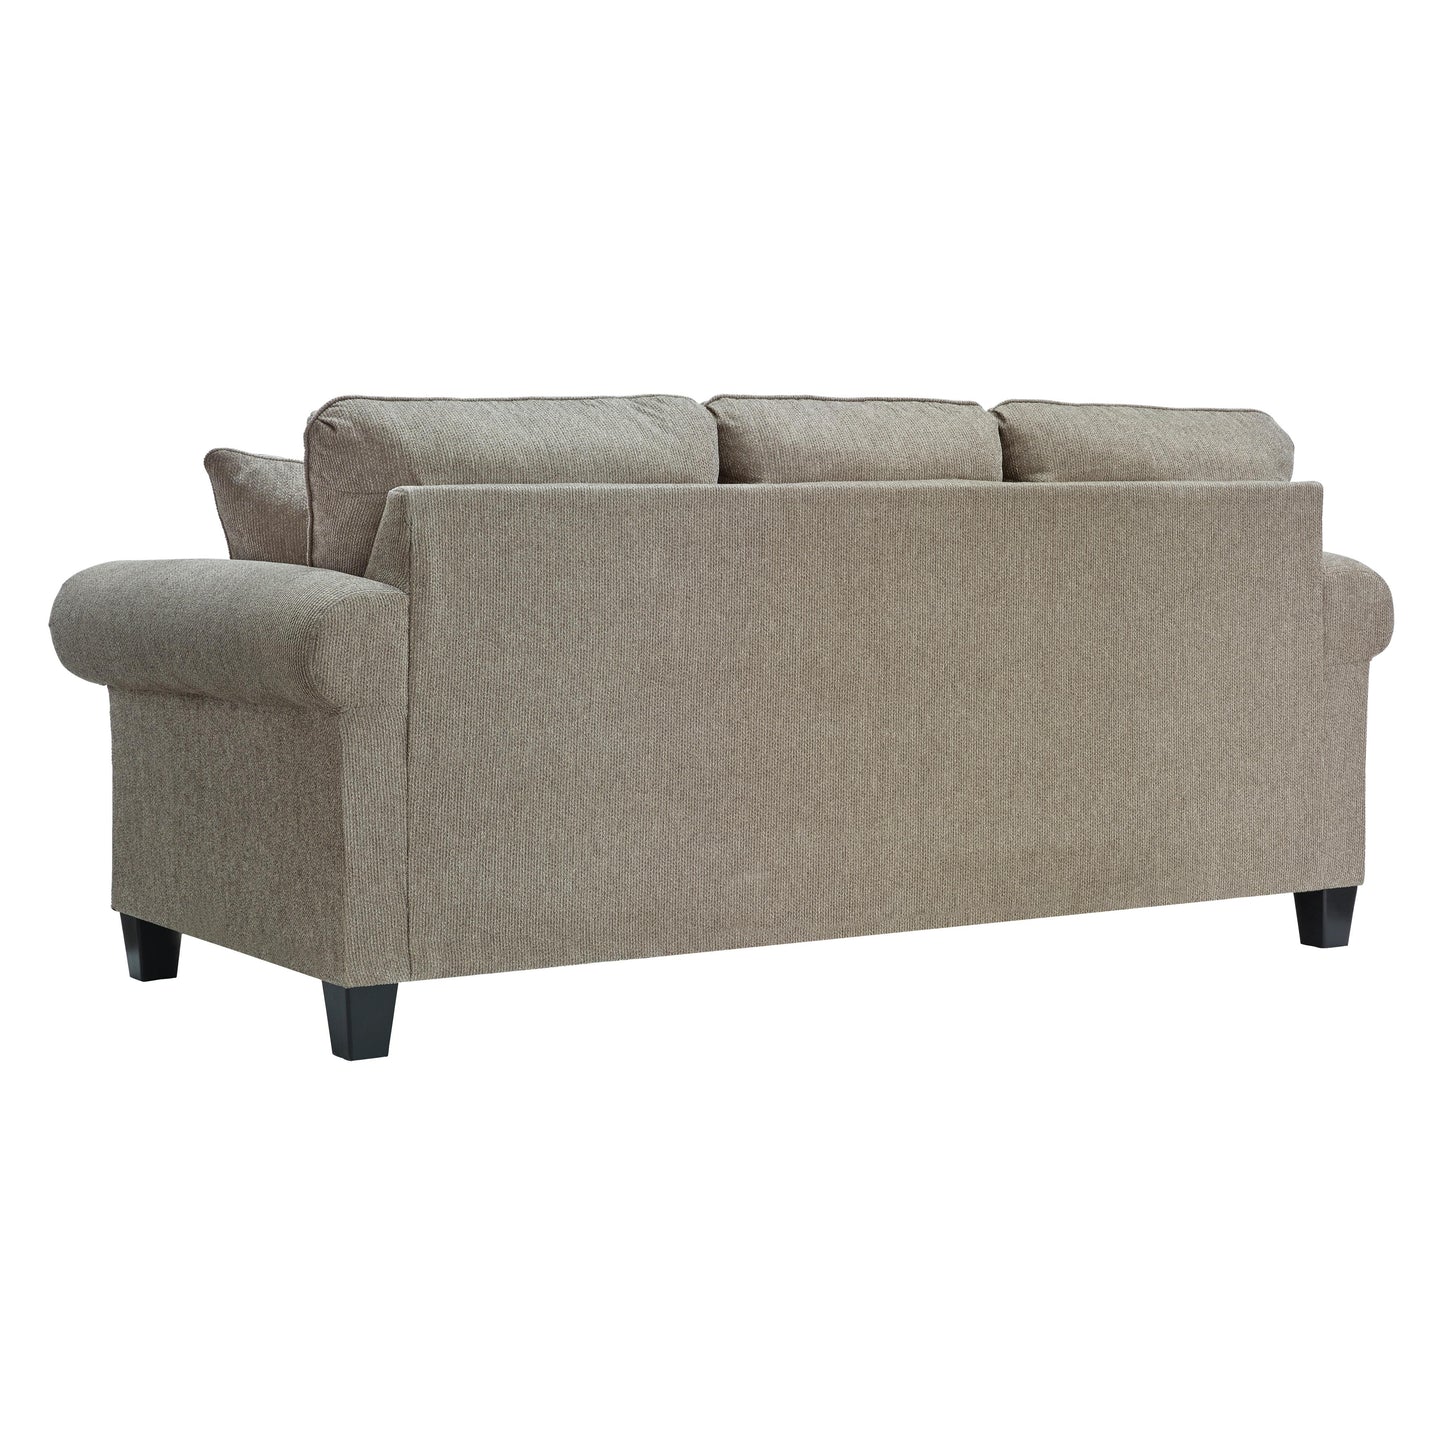 Benchcraft Shewsbury Stationary Fabric Sofa 4720238